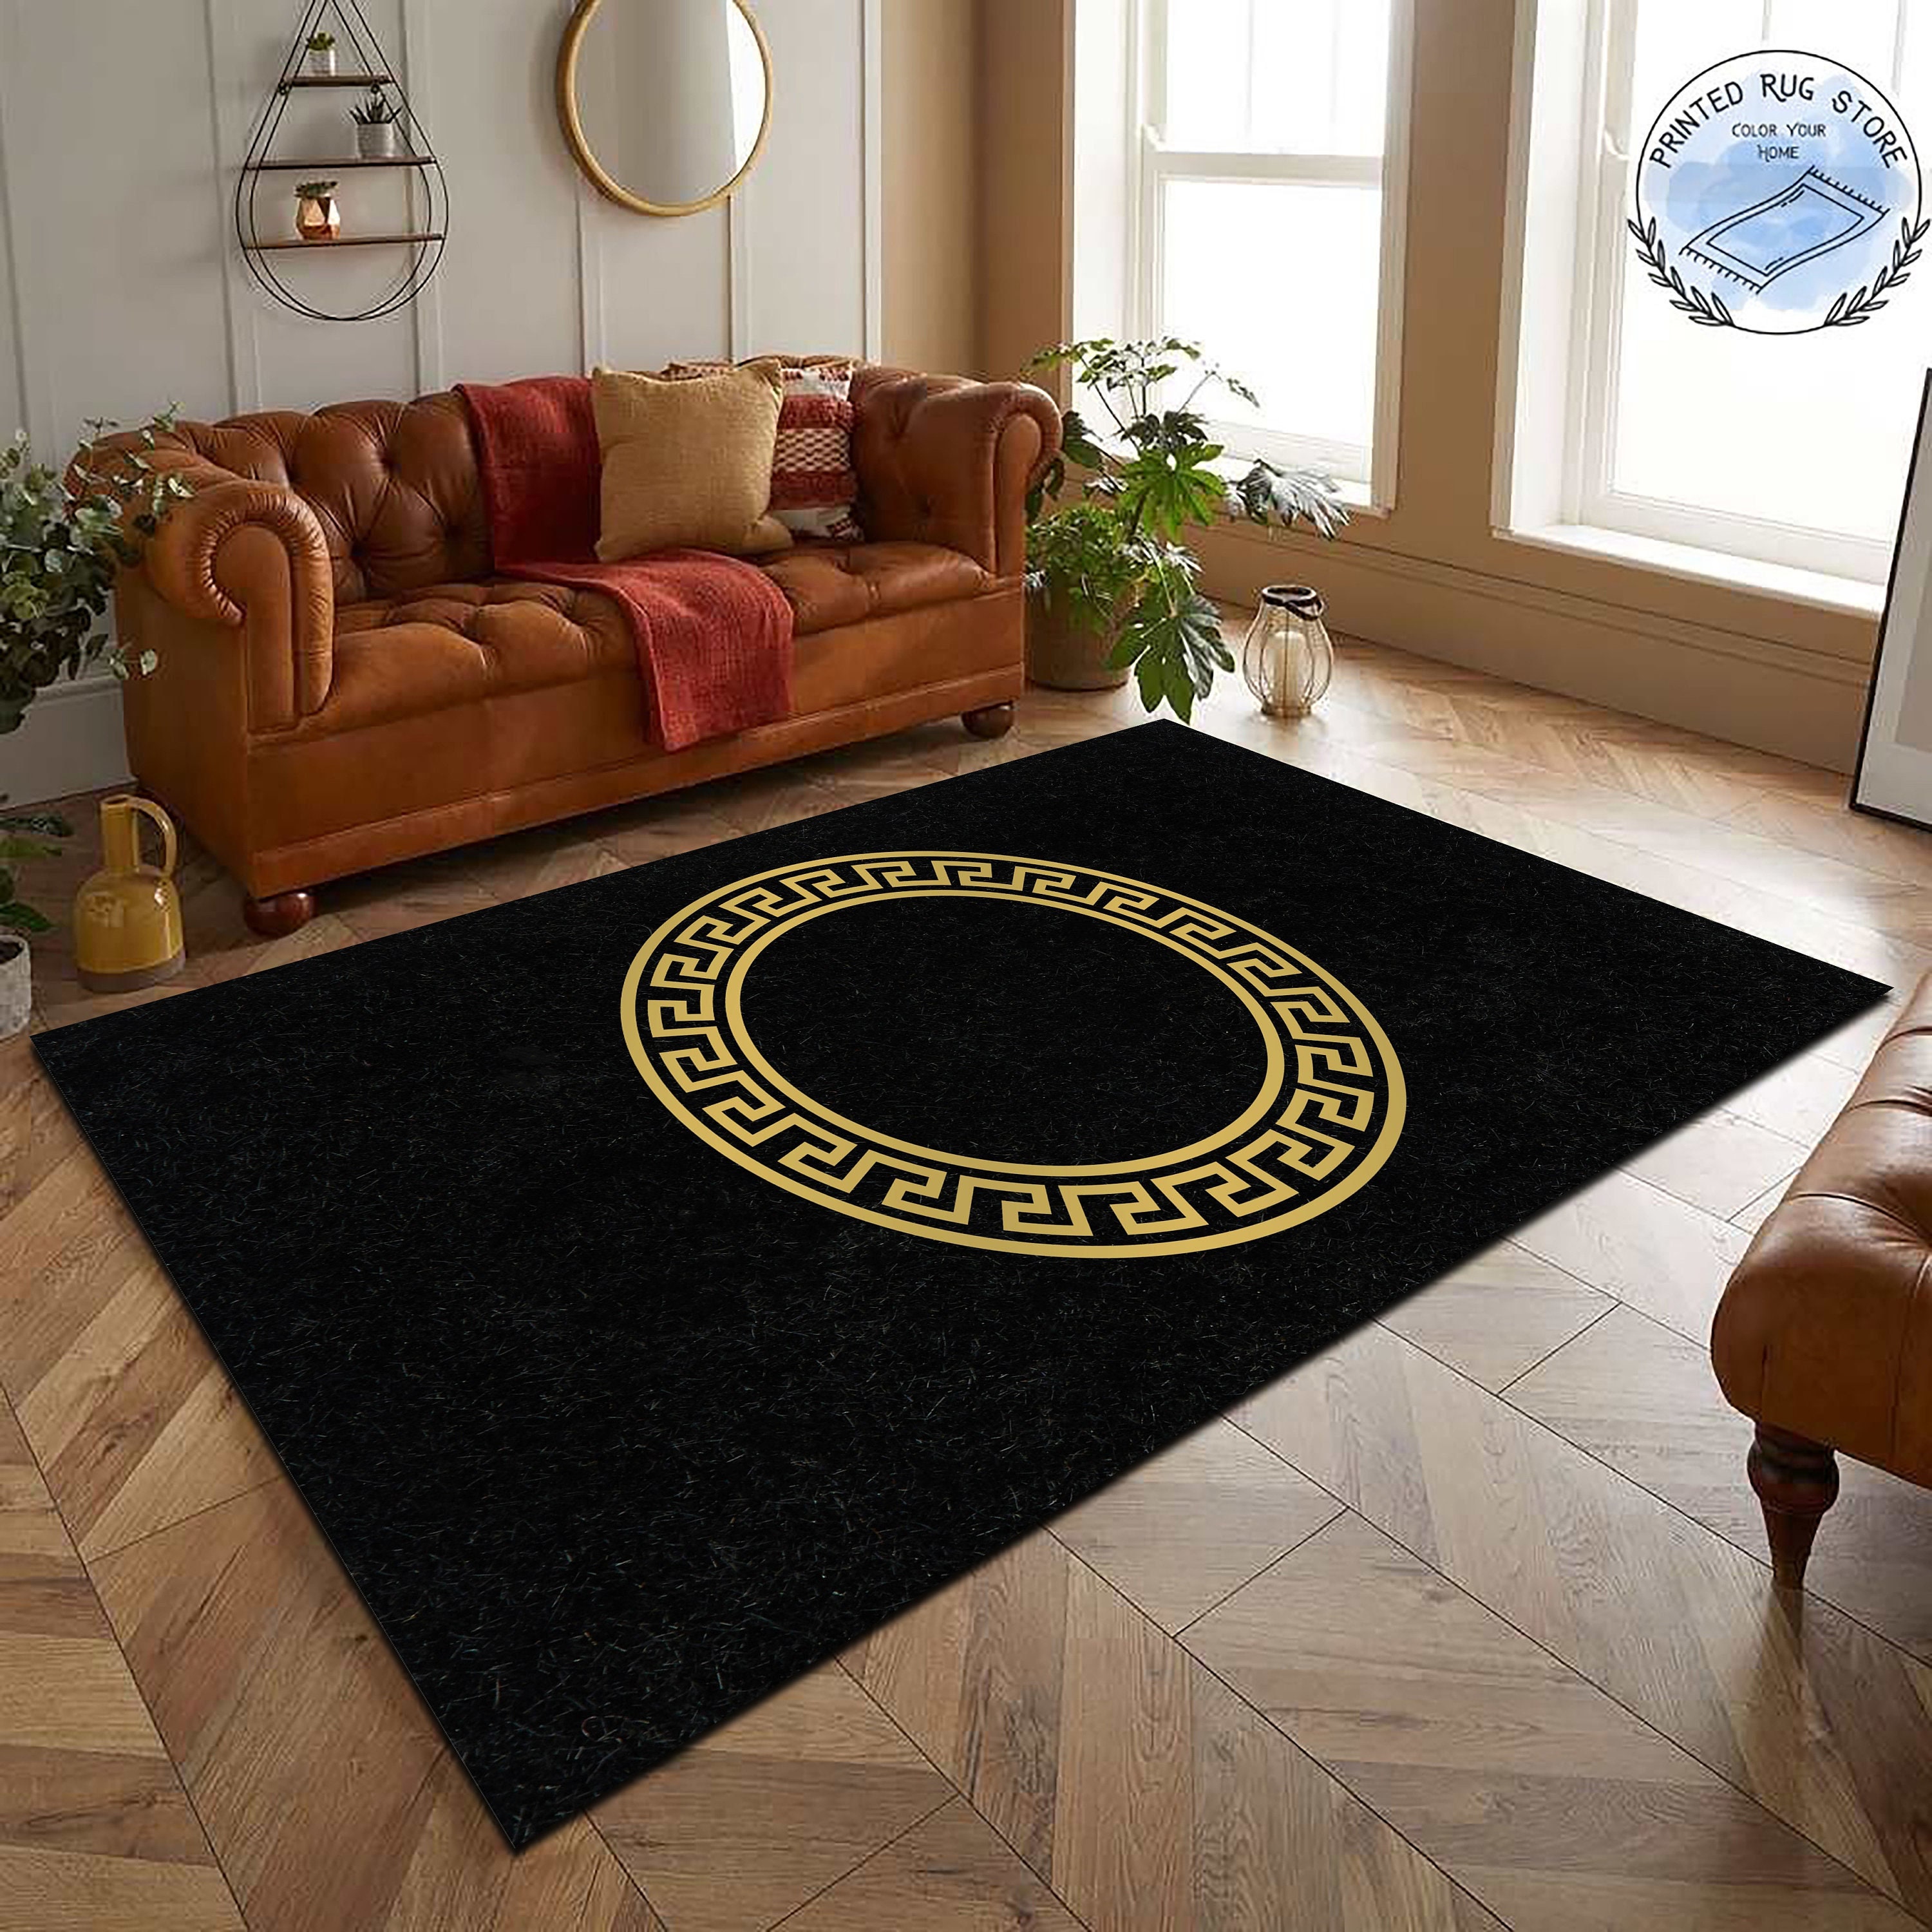 Versace Medusa Black Gold Luxury Living Room Carpet Rug ...